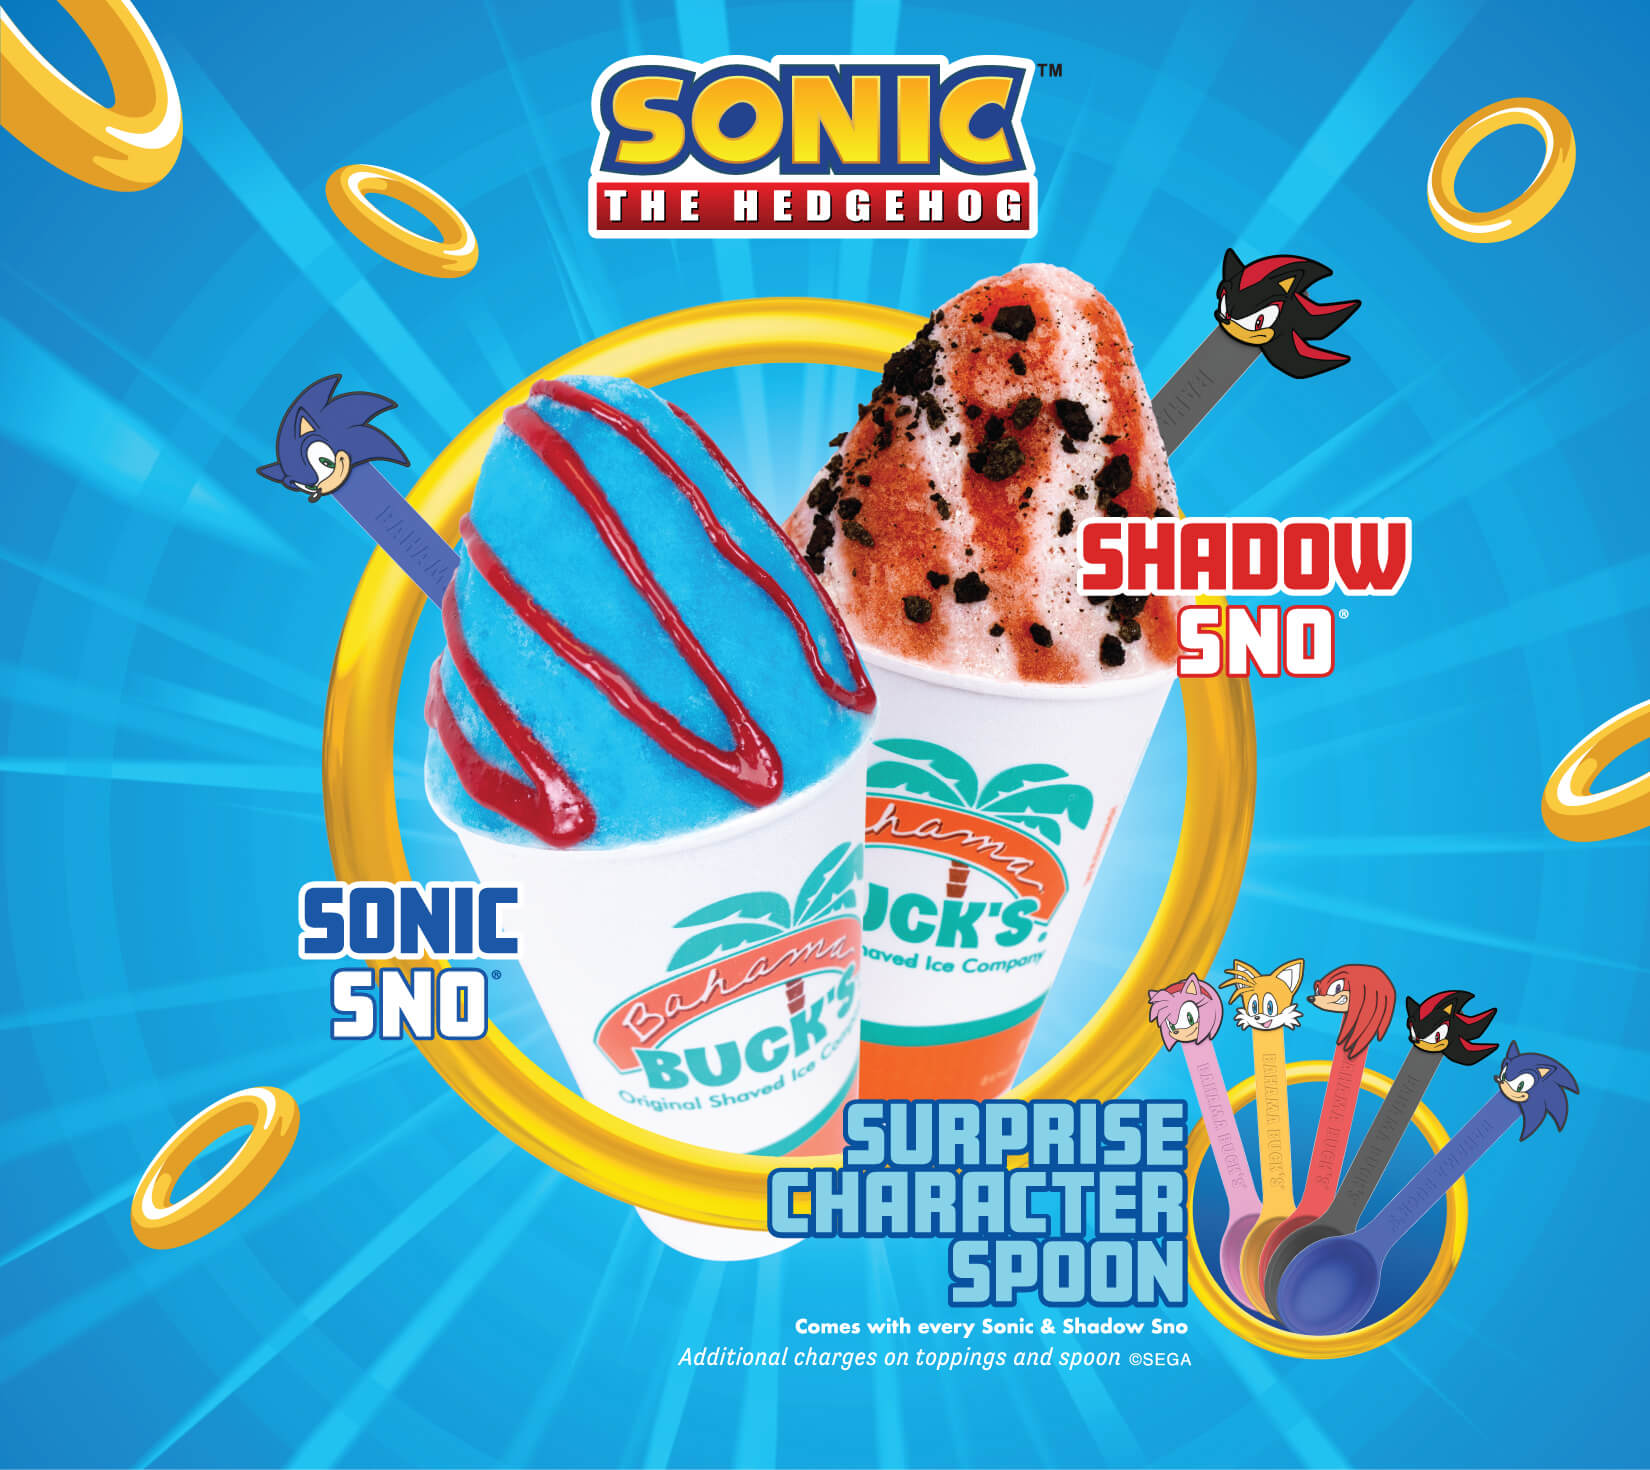 Sonic-the-Hedgehog-Shadow-Sno-promo